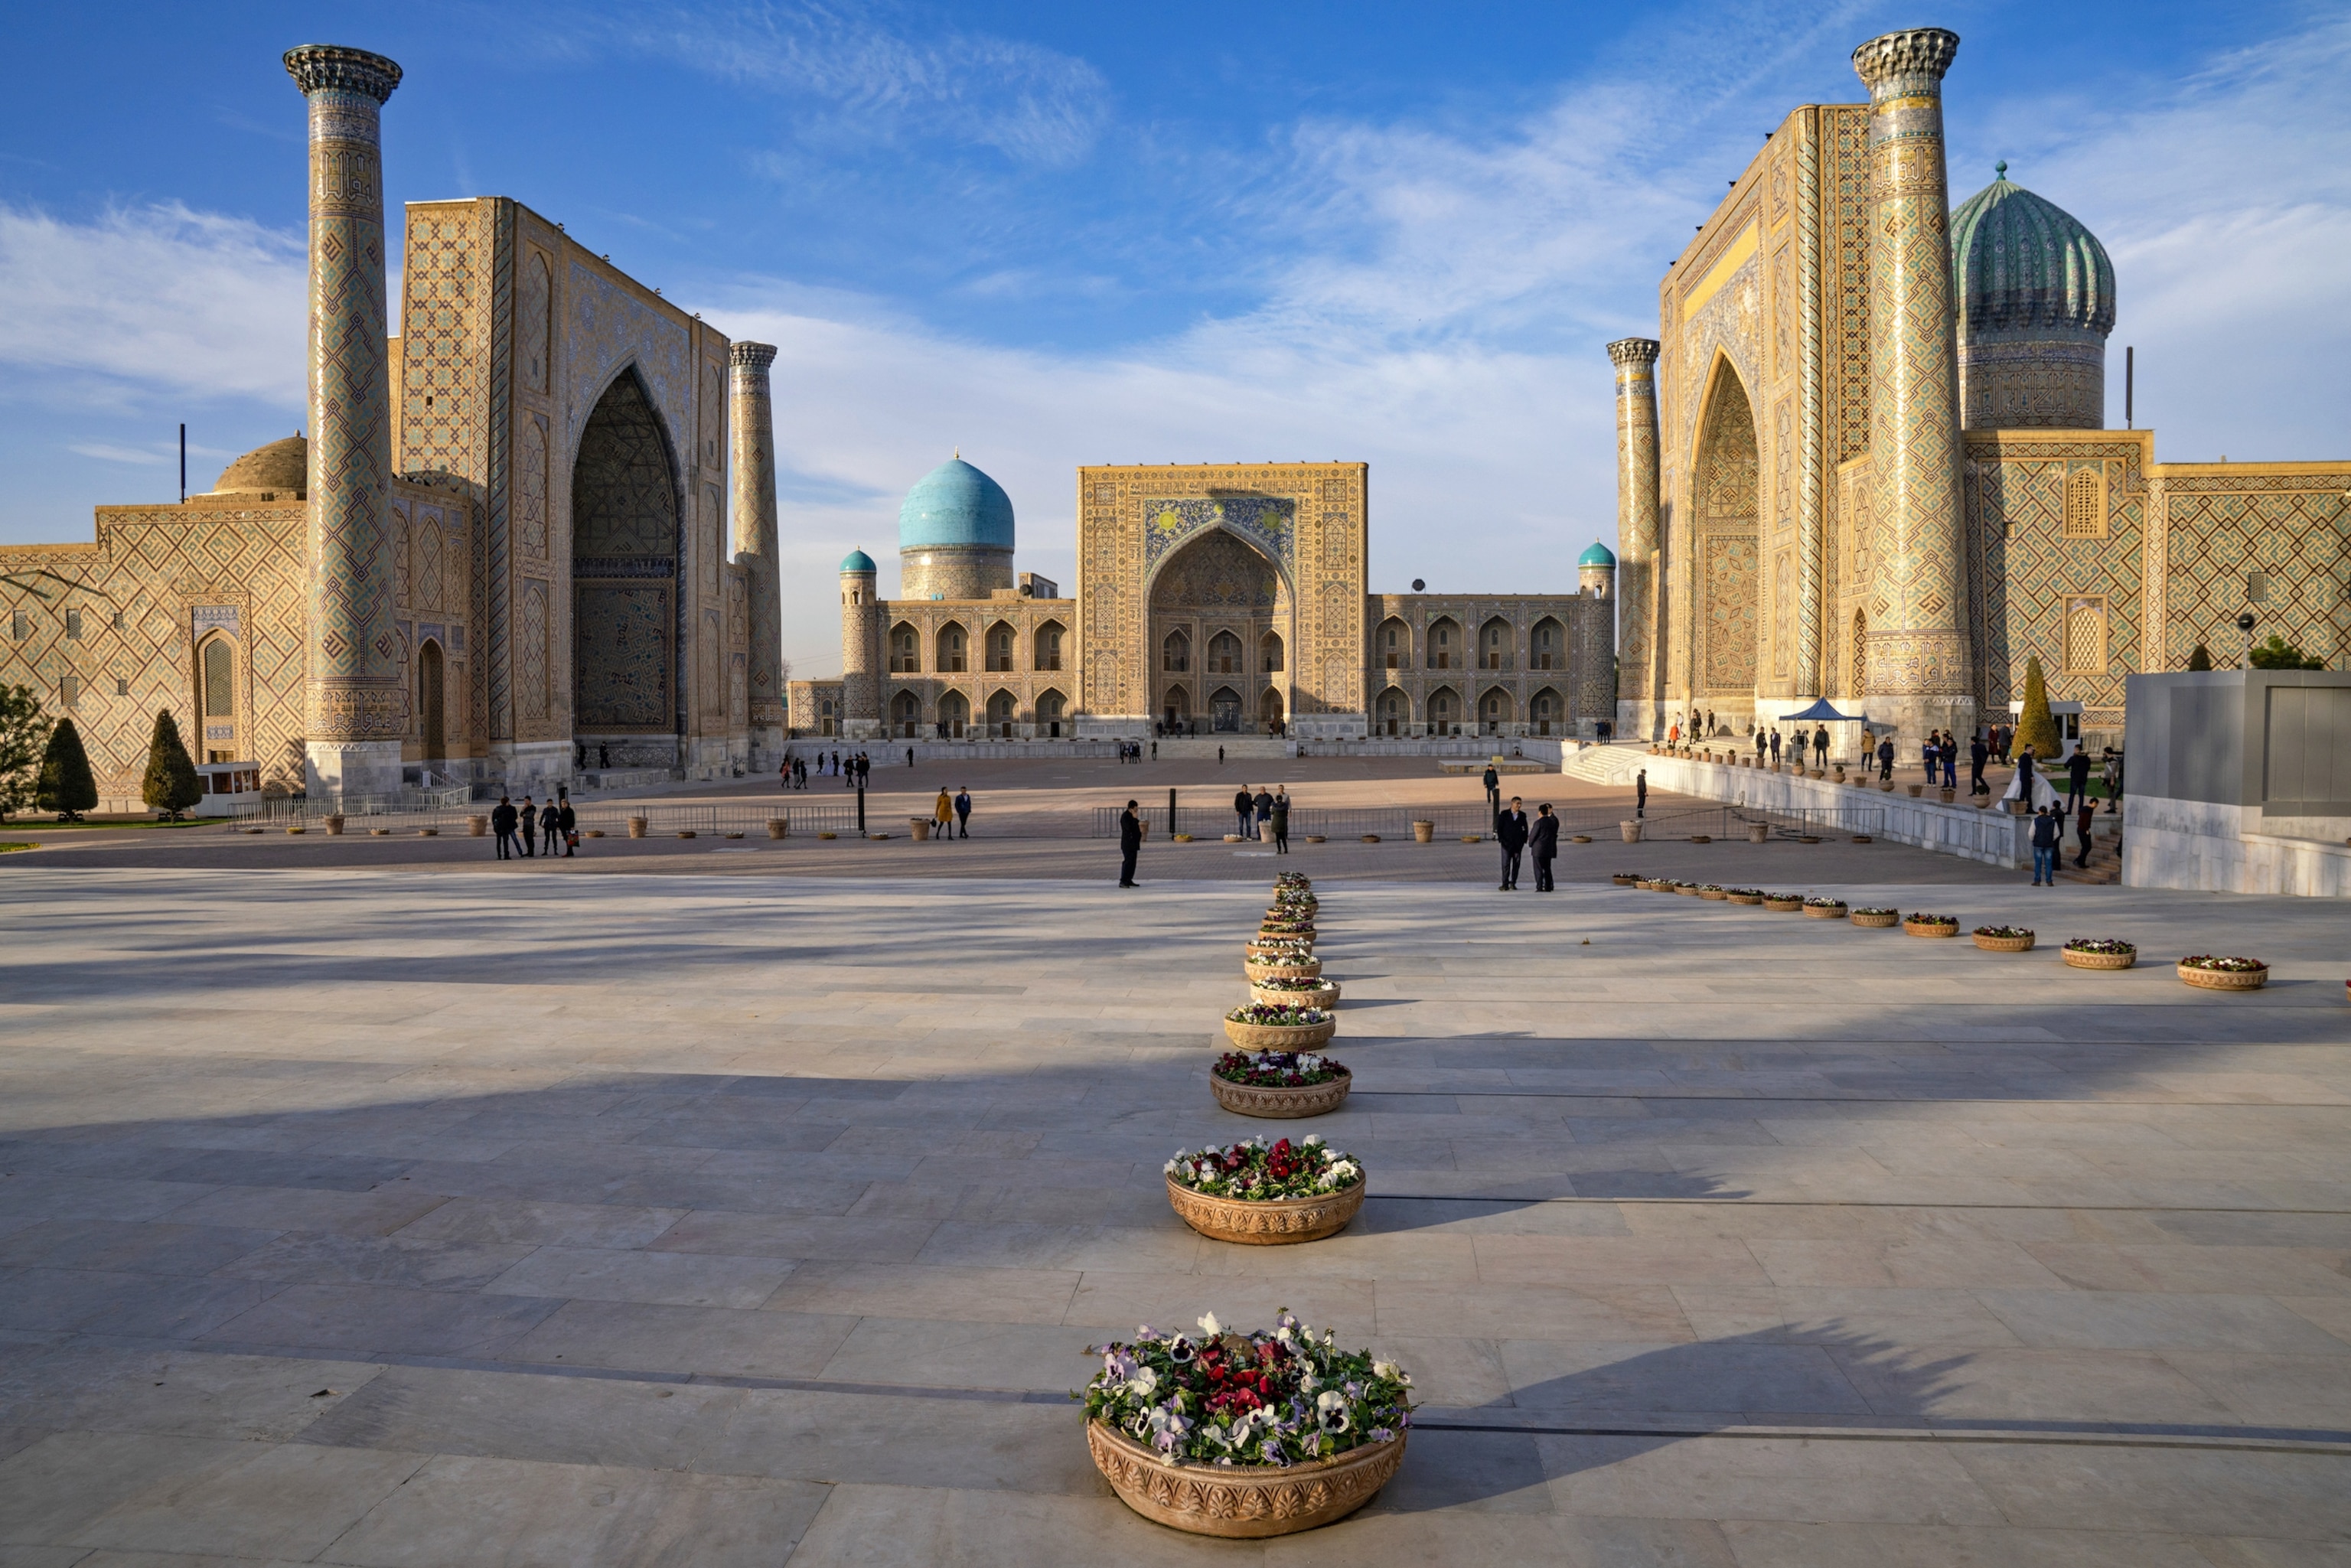 See stunning photos of historic architecture in Tashkent and Samarkand